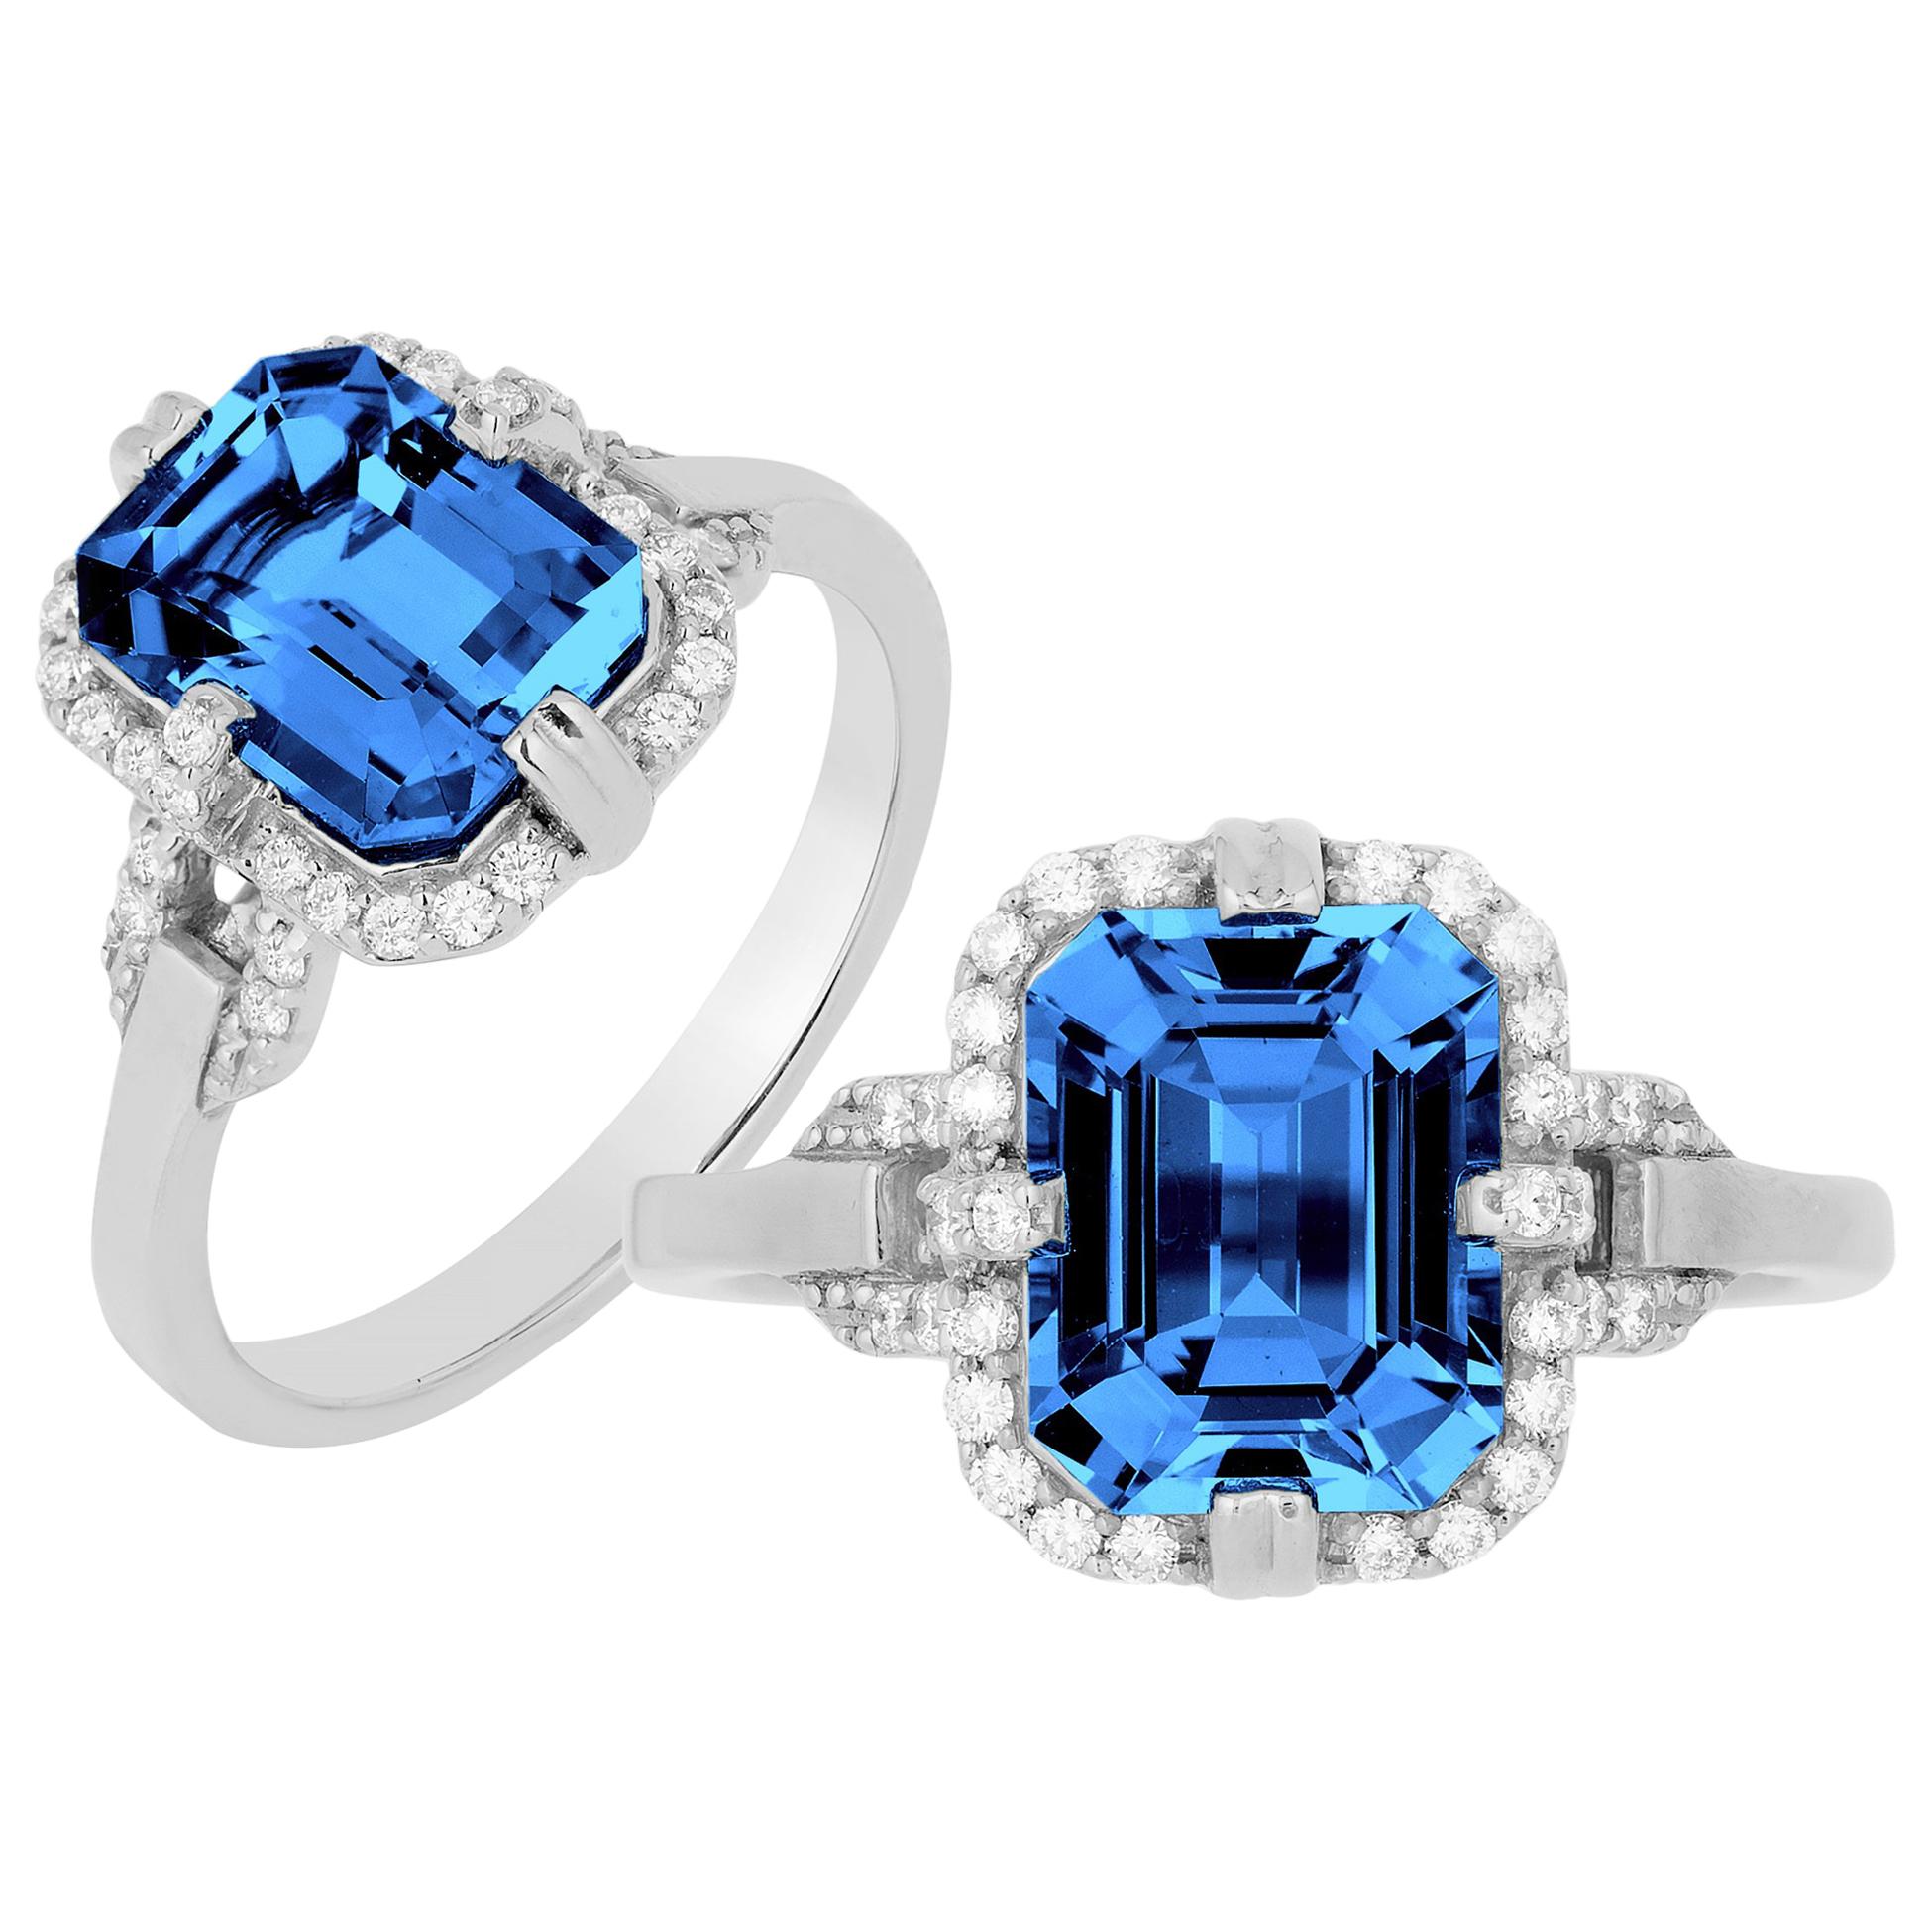 Goshwara Emerald Cut London Blue Topaz and Diamond Ring